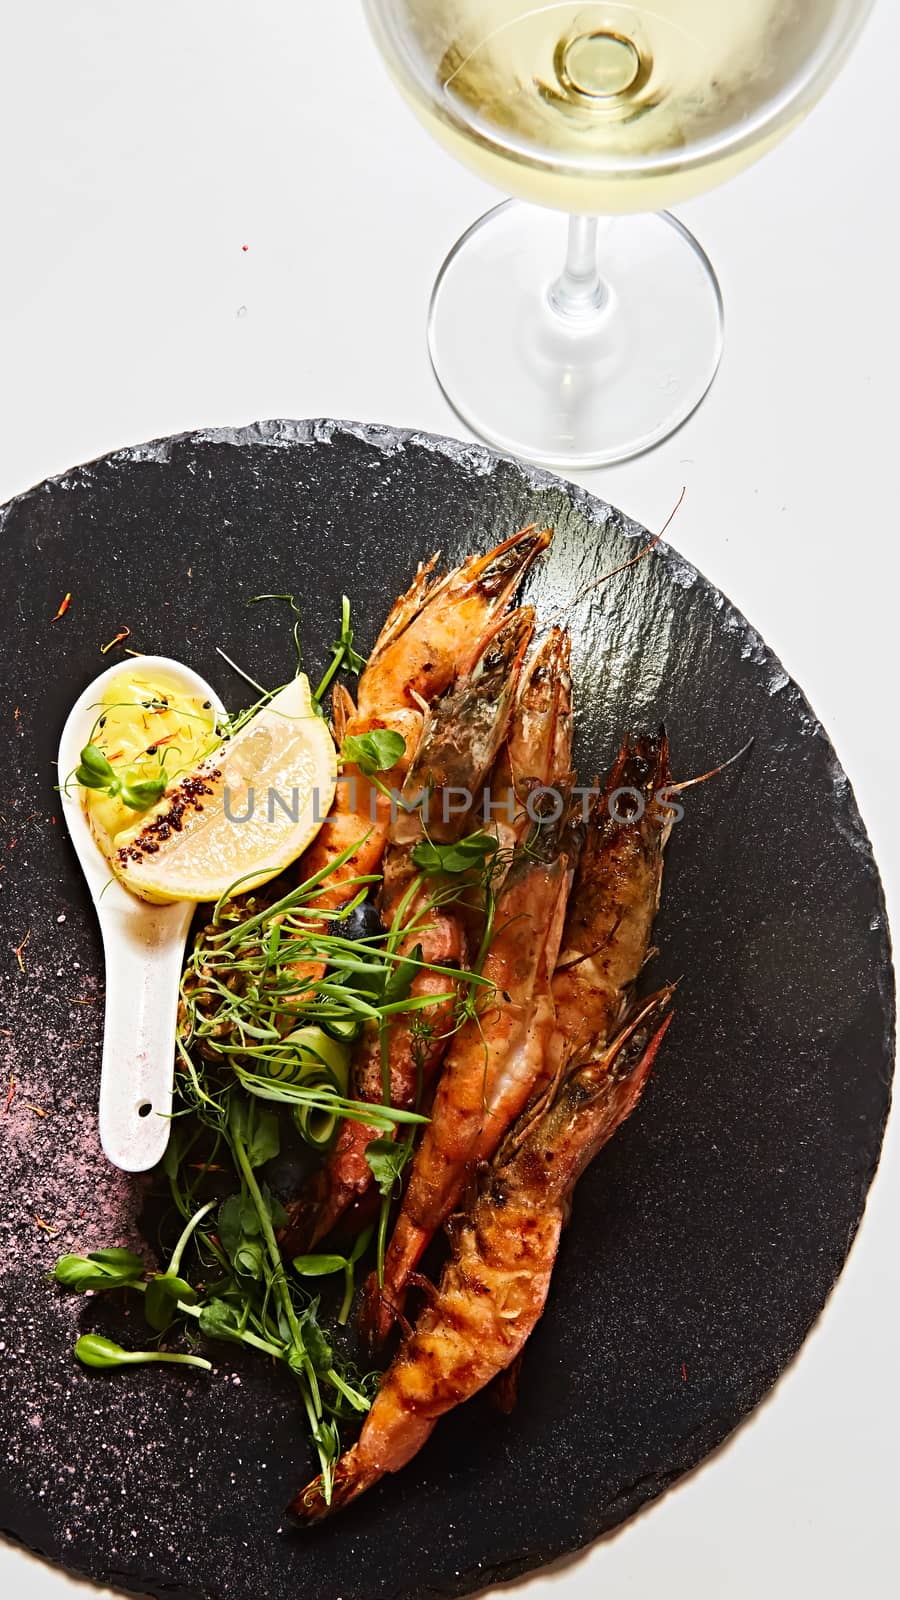 Grilled shrimp skewers. Seafood, shelfish. Shrimps Prawns skewers with herbs, garlic and lemon. Barbecue srimps prawns.